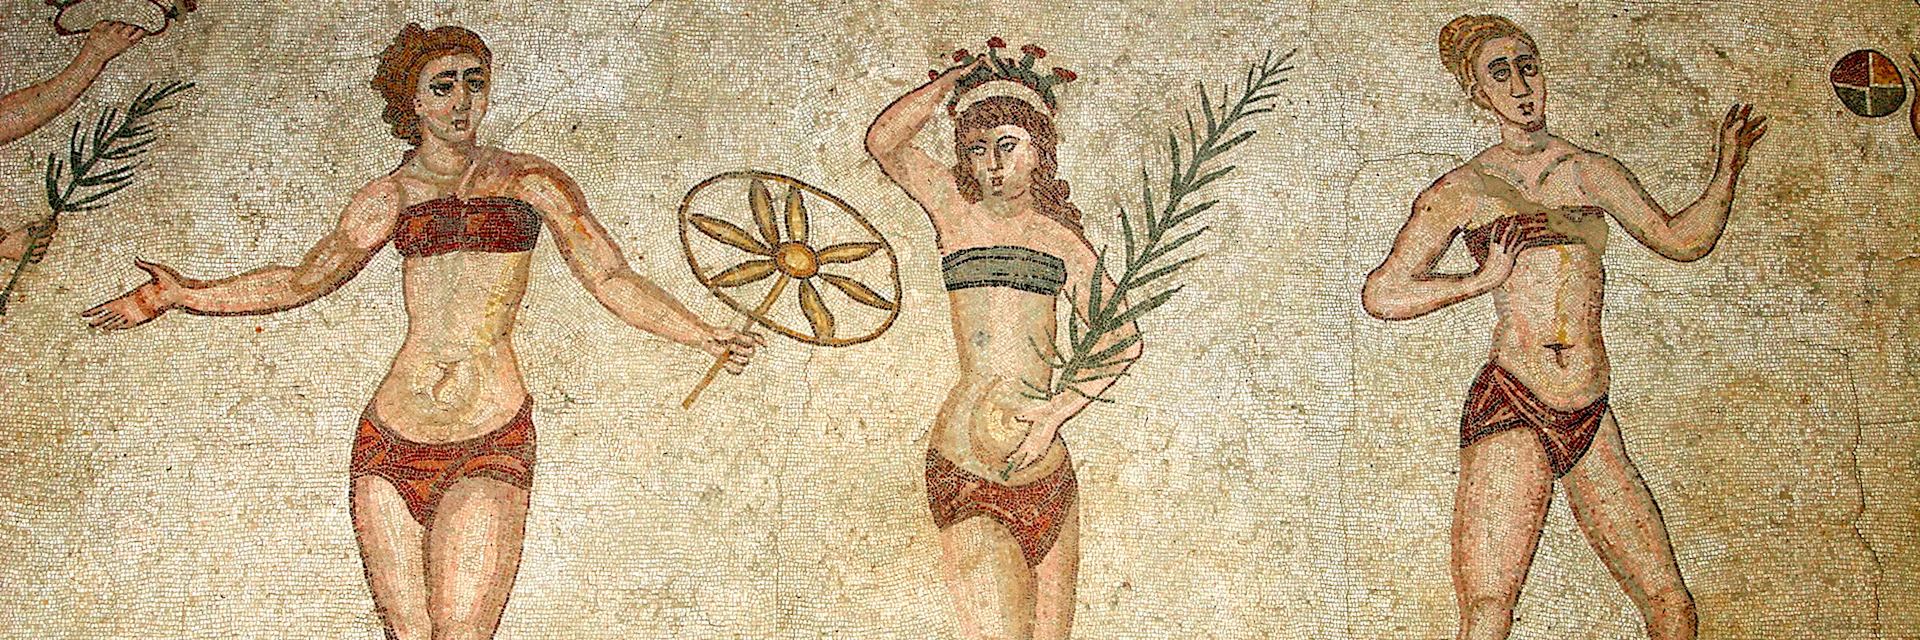 Roman mosaic of women in bikinis, Villa Romana Casale